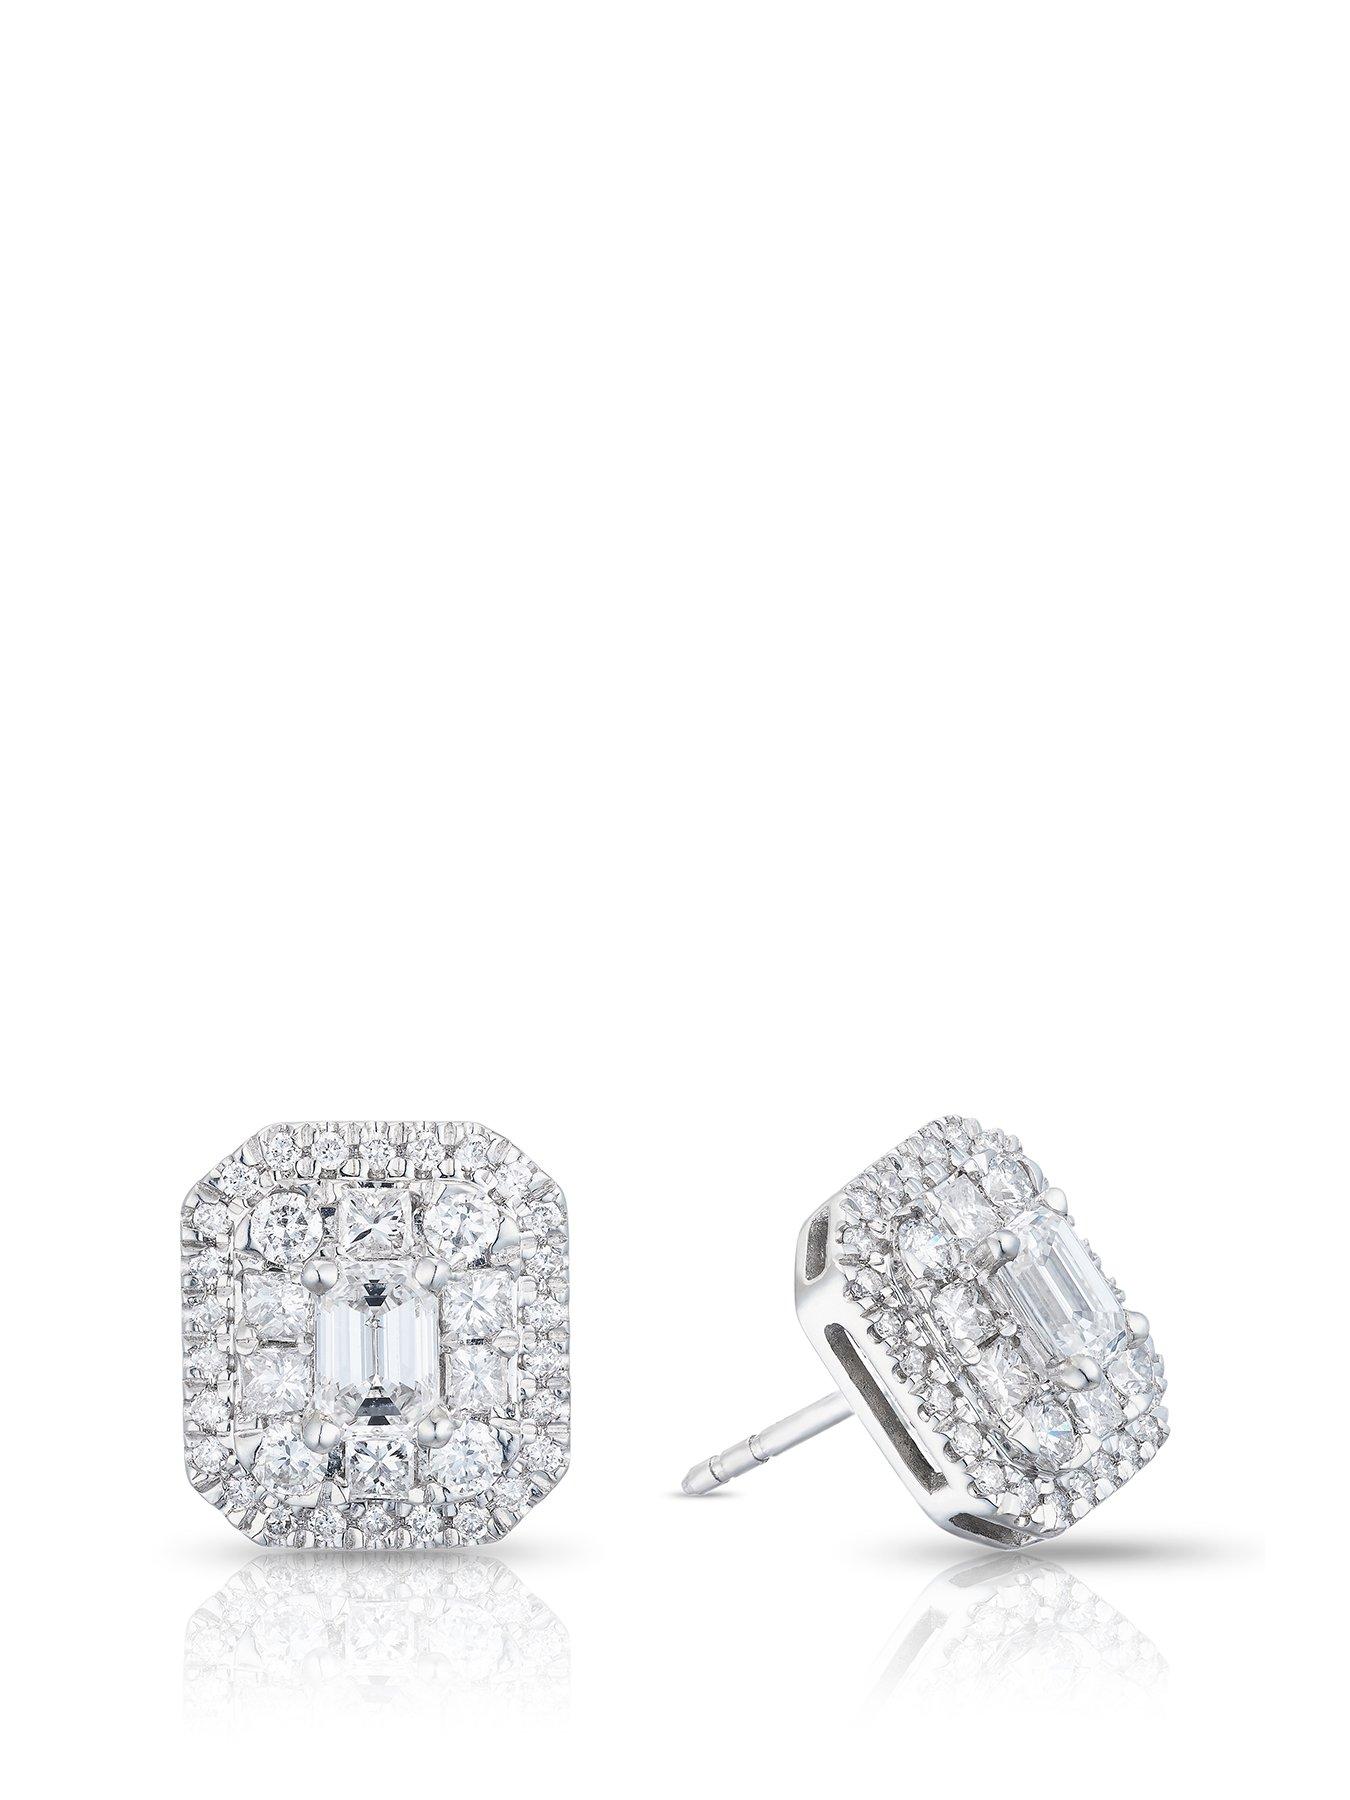 9ct White Gold Channel Set Diamond Hoop Earrings Ernest, 54% OFF